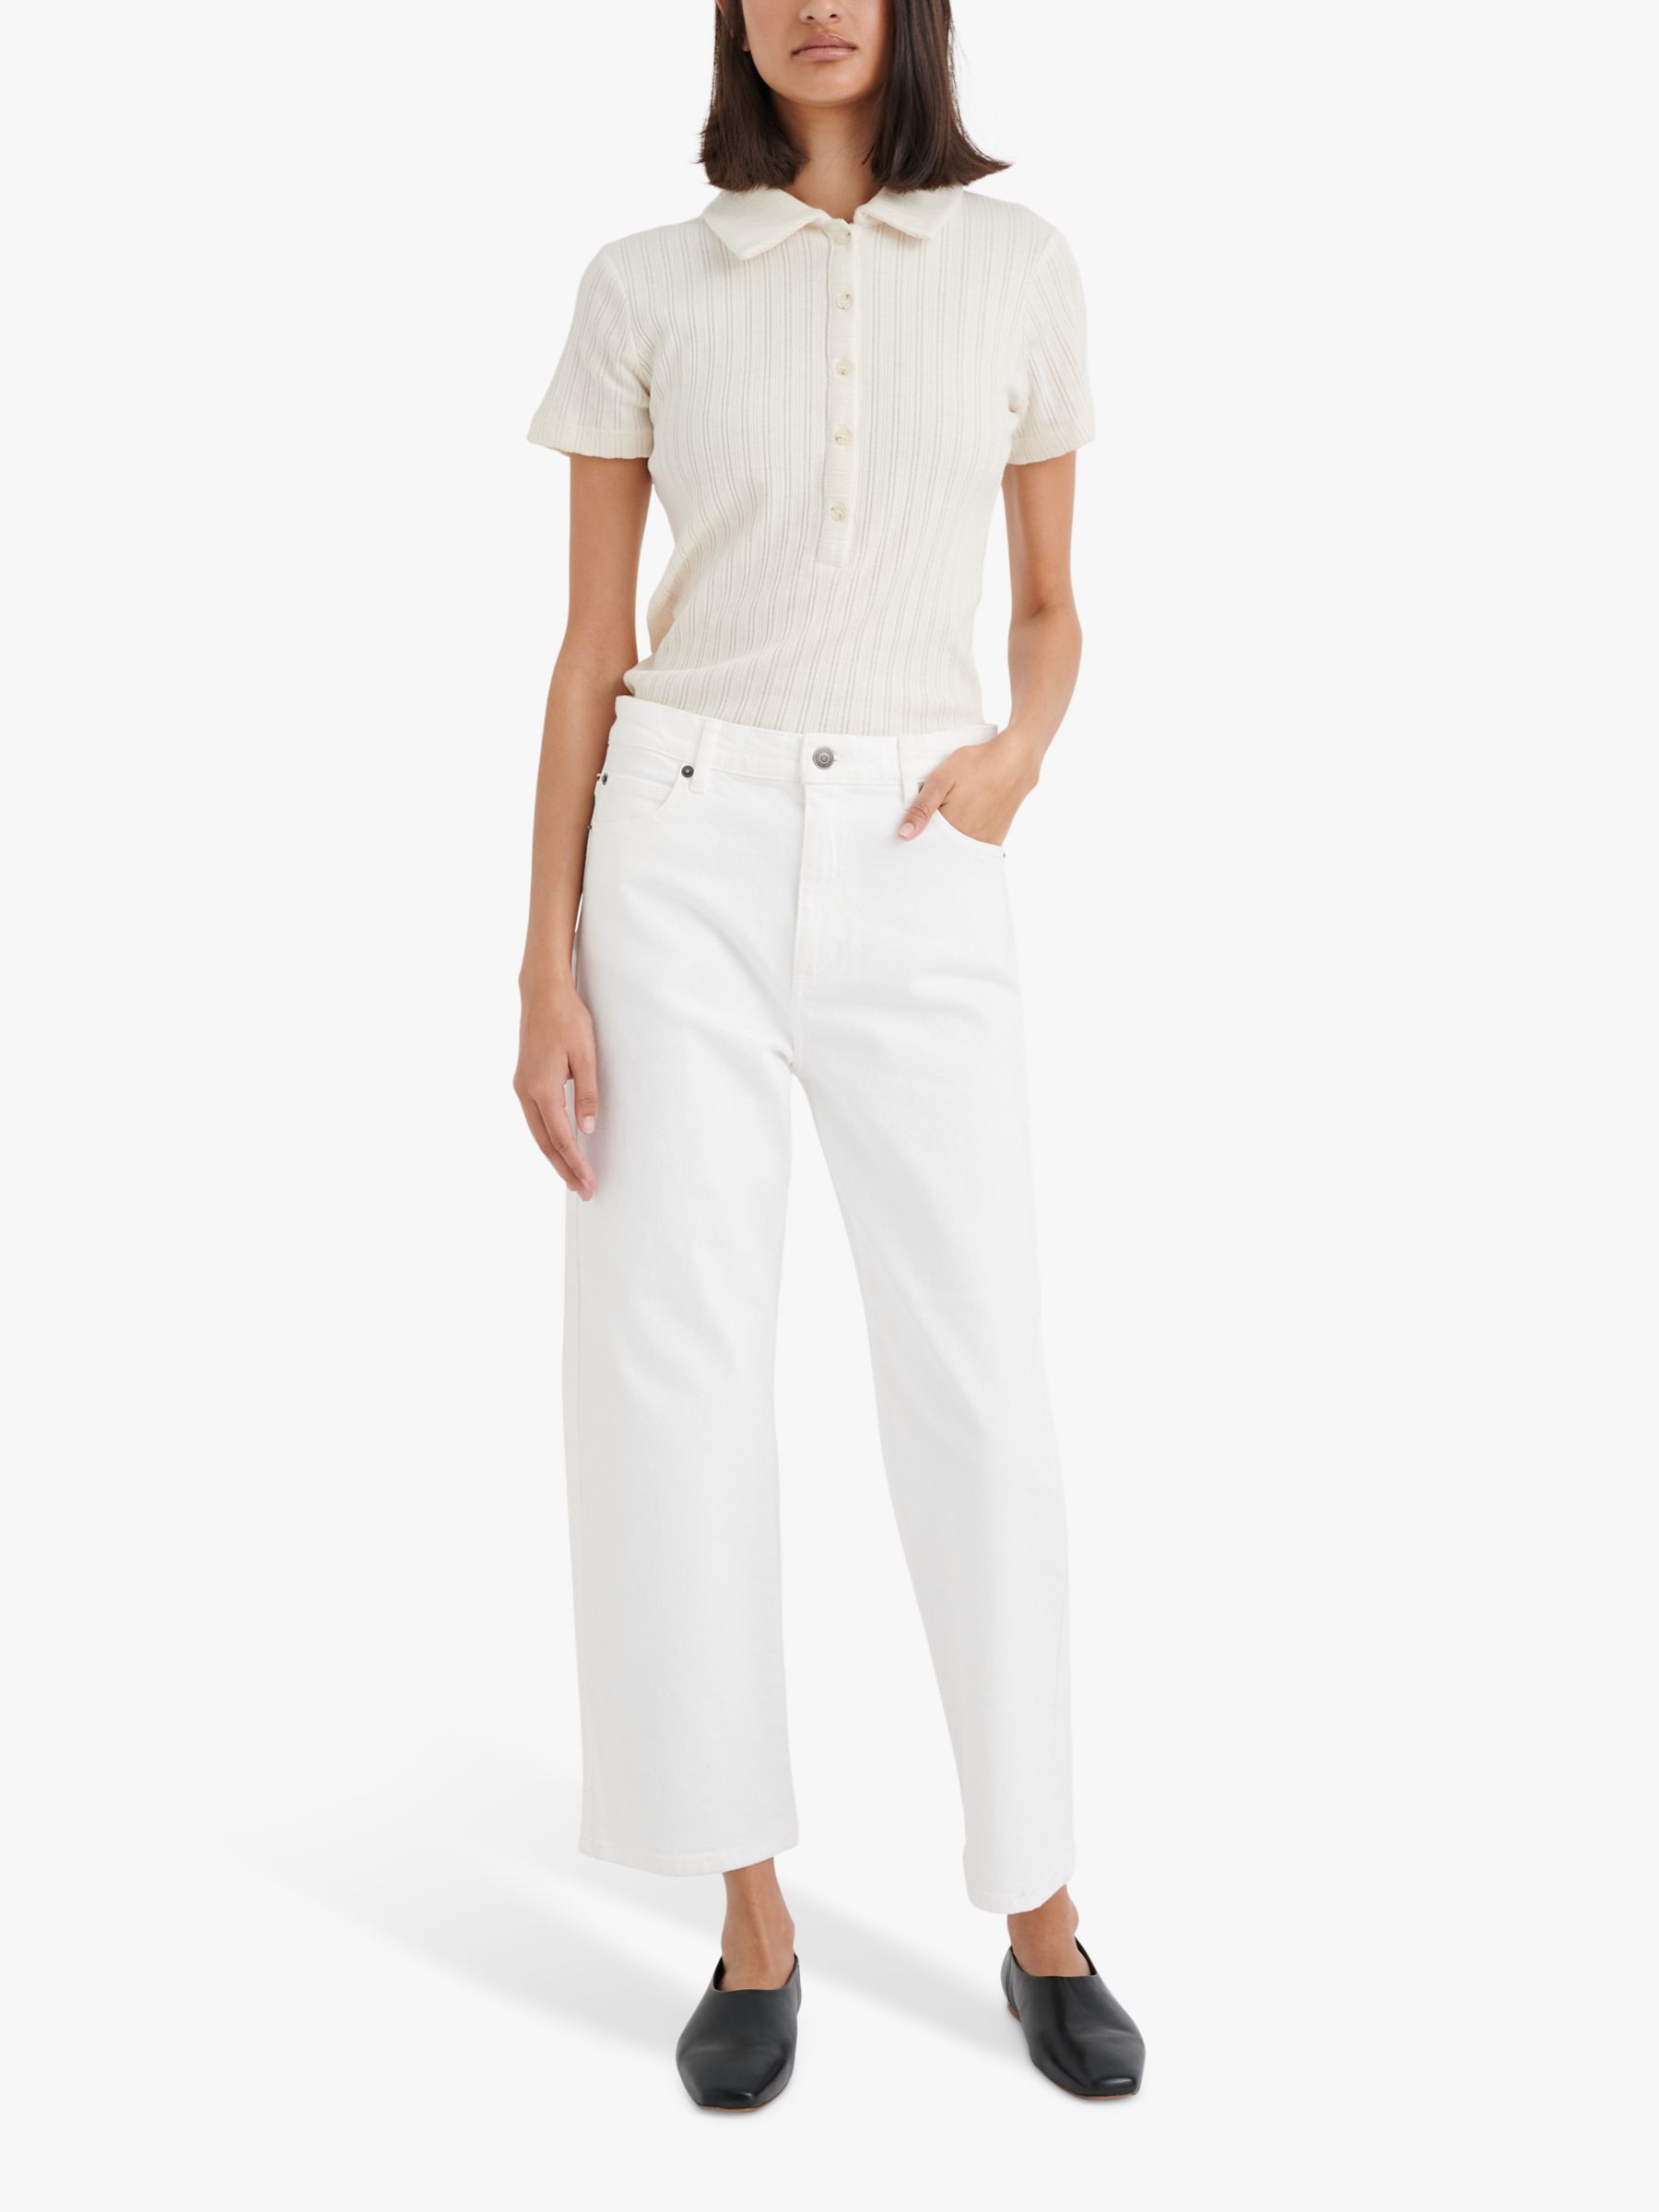 InWear Kiko Stripe Linen Blend Shirt, Black/White at John Lewis & Partners